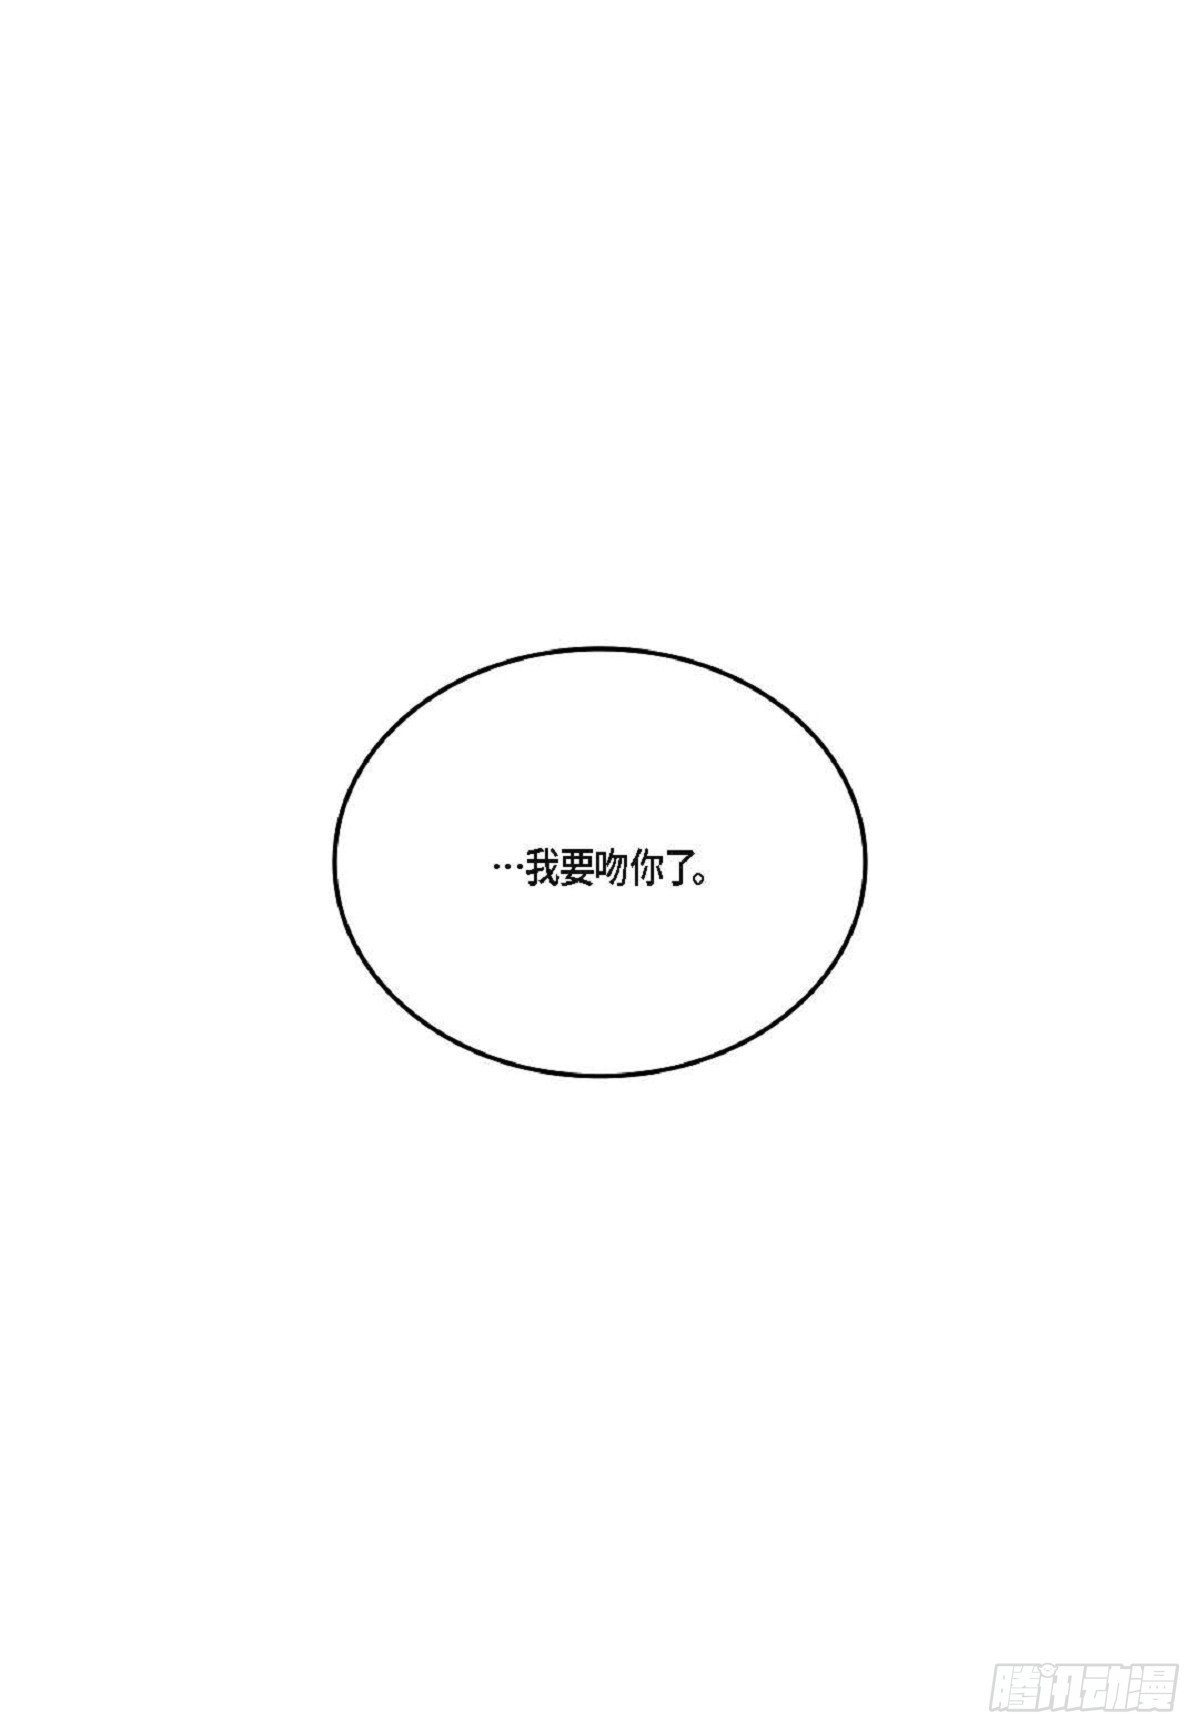 日常多情事 - ep.93(2/2) - 3